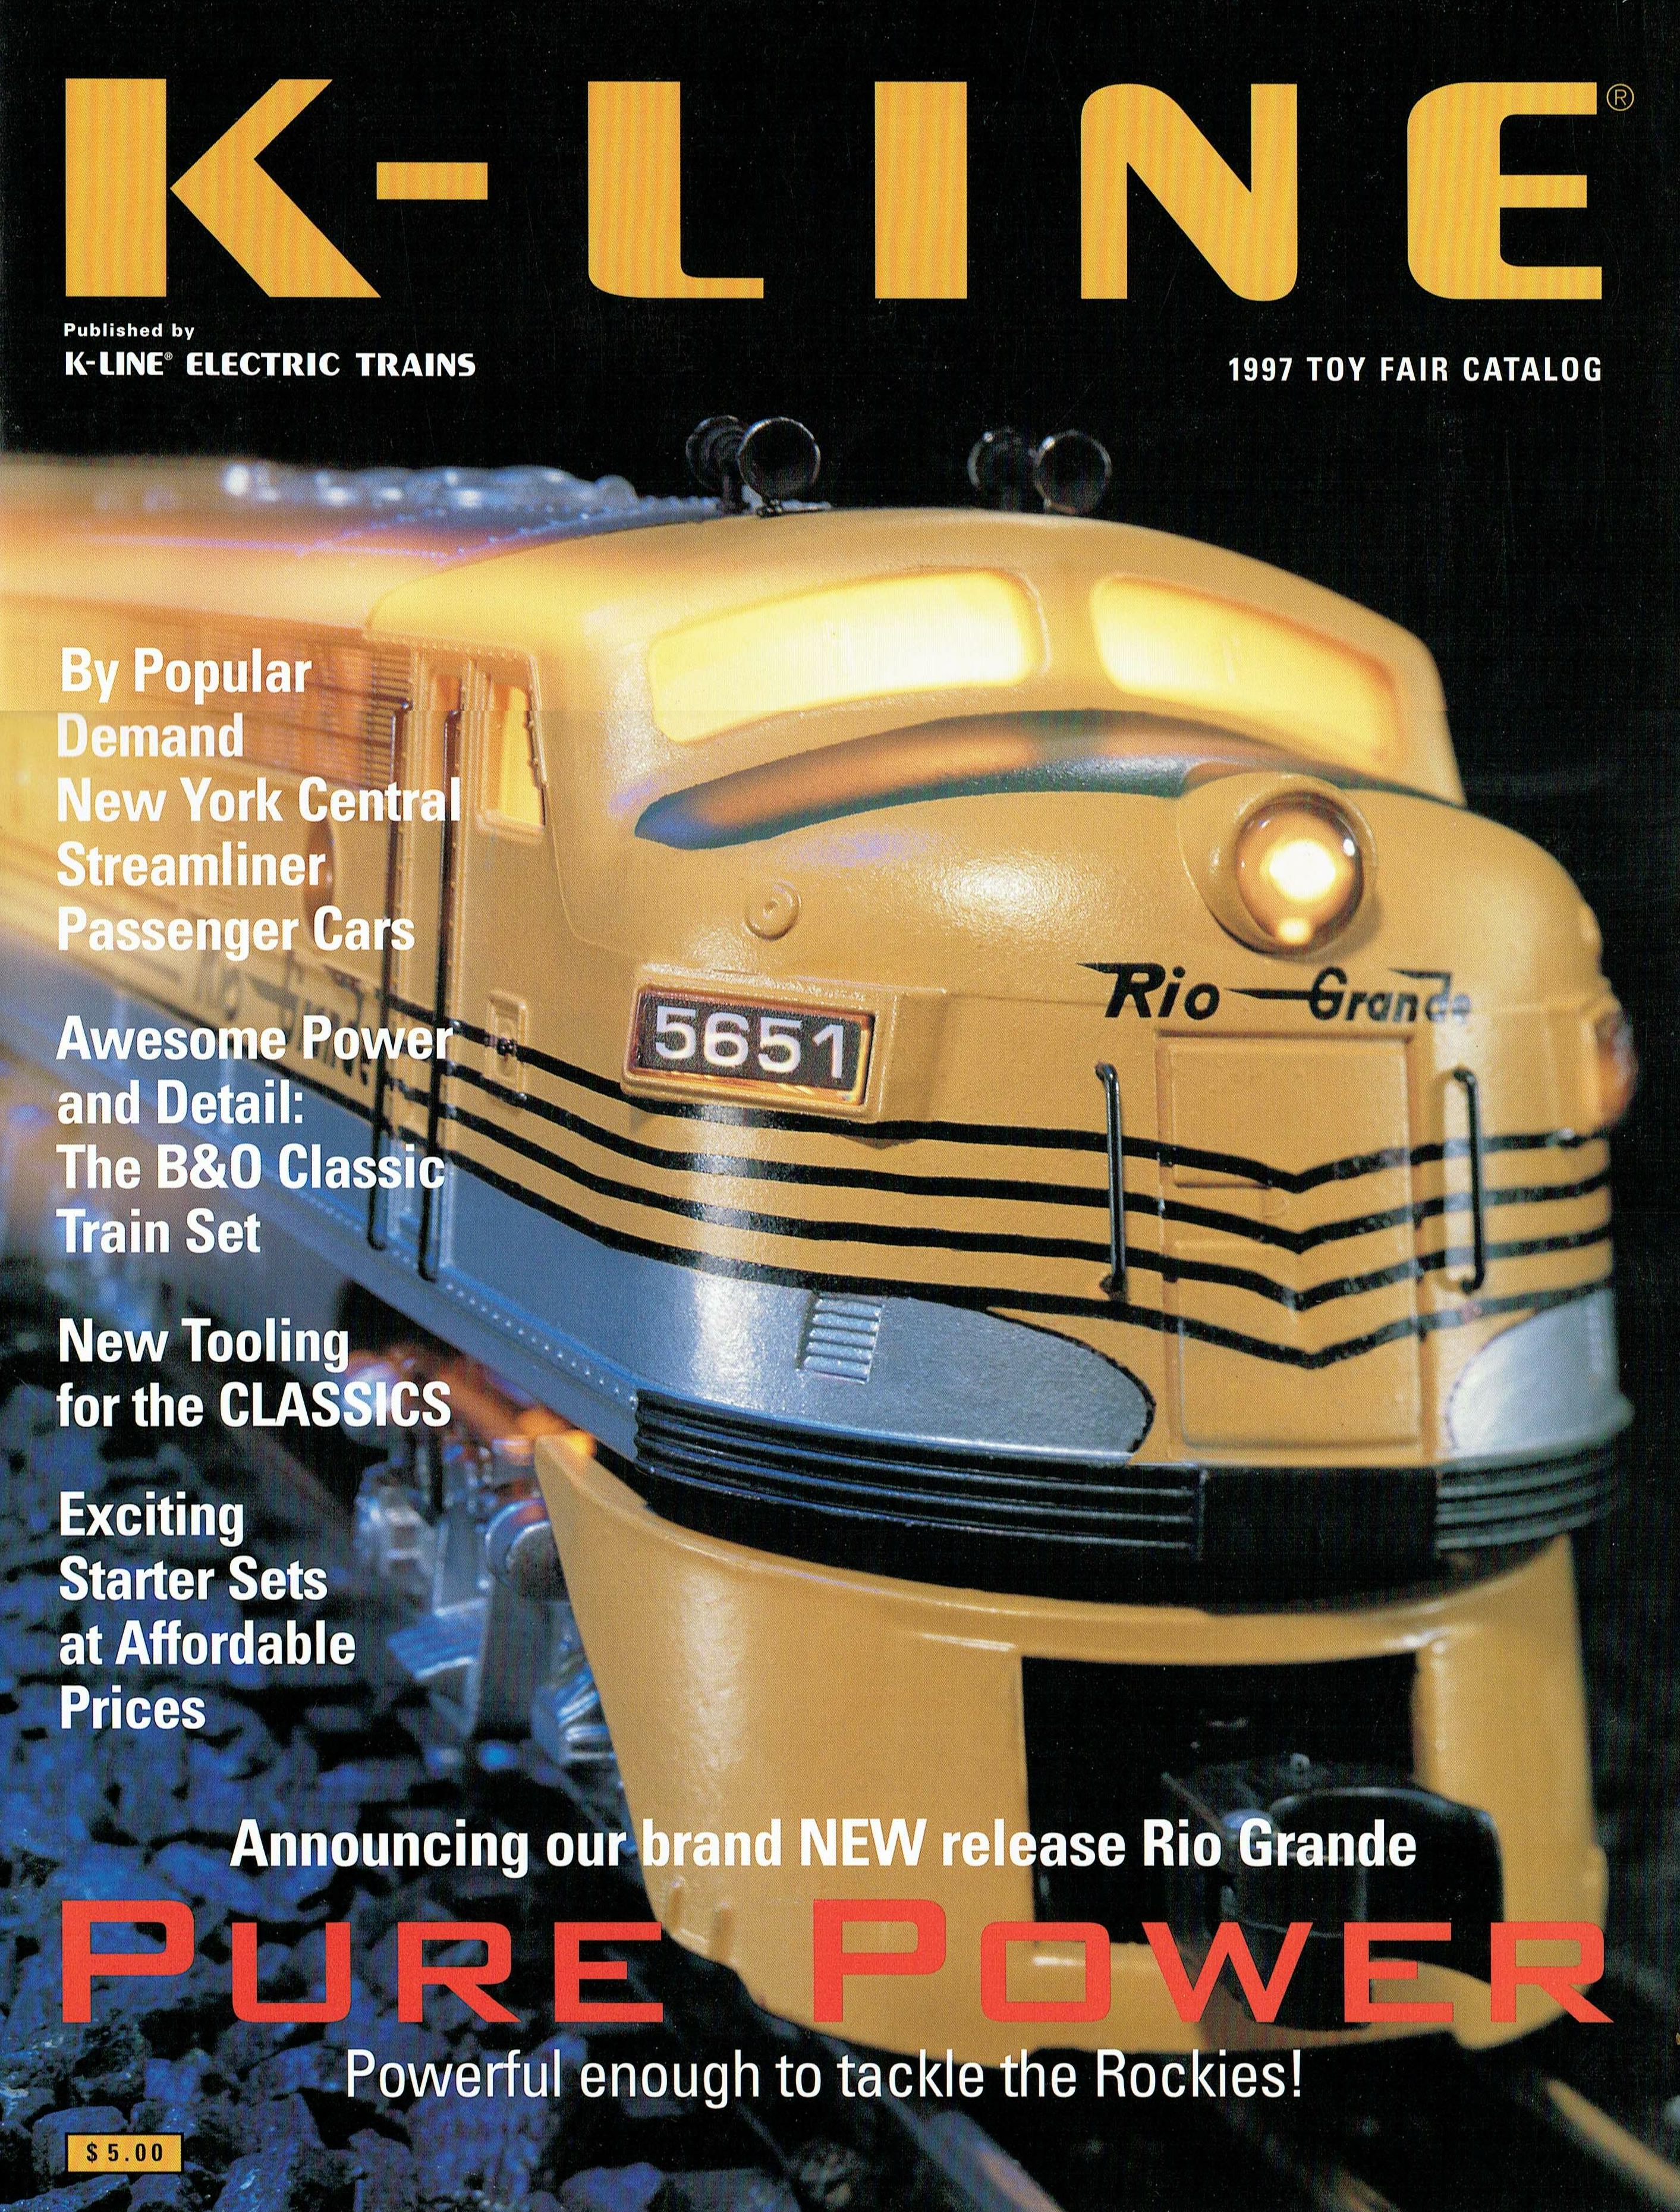 K-Line 1997 Toy Fair Catalog image